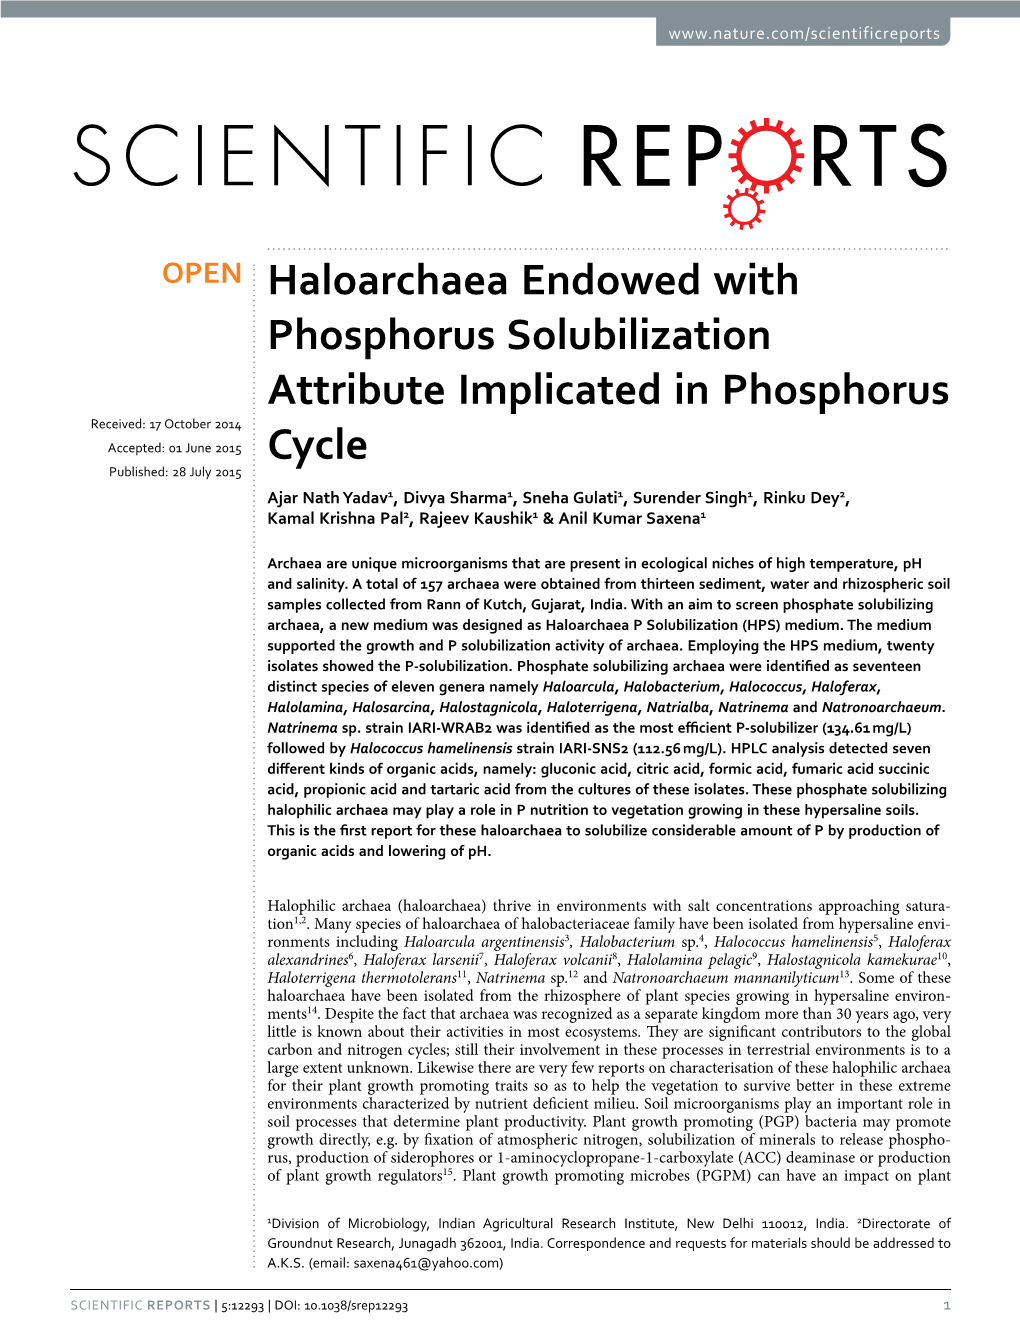 Haloarchaea Endowed with Phosphorus Solubilization Attribute